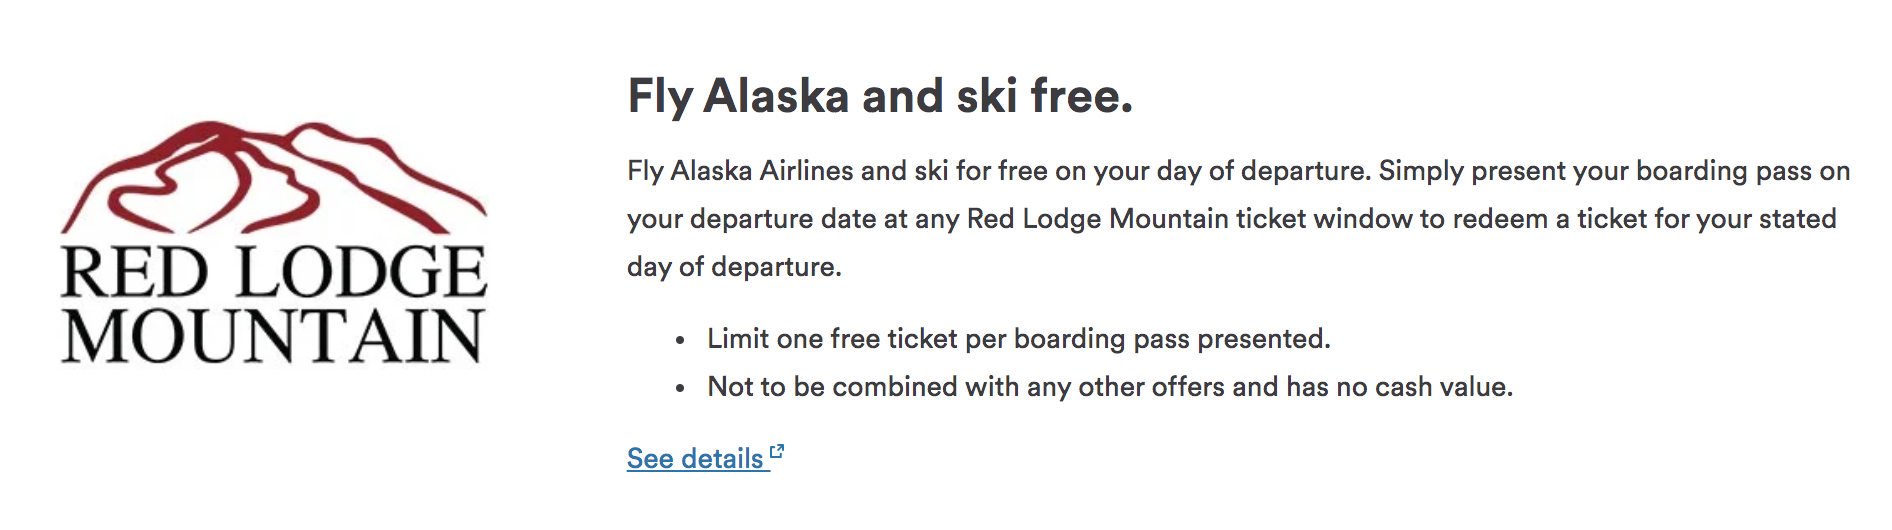 Alaska airlines free lift ticket